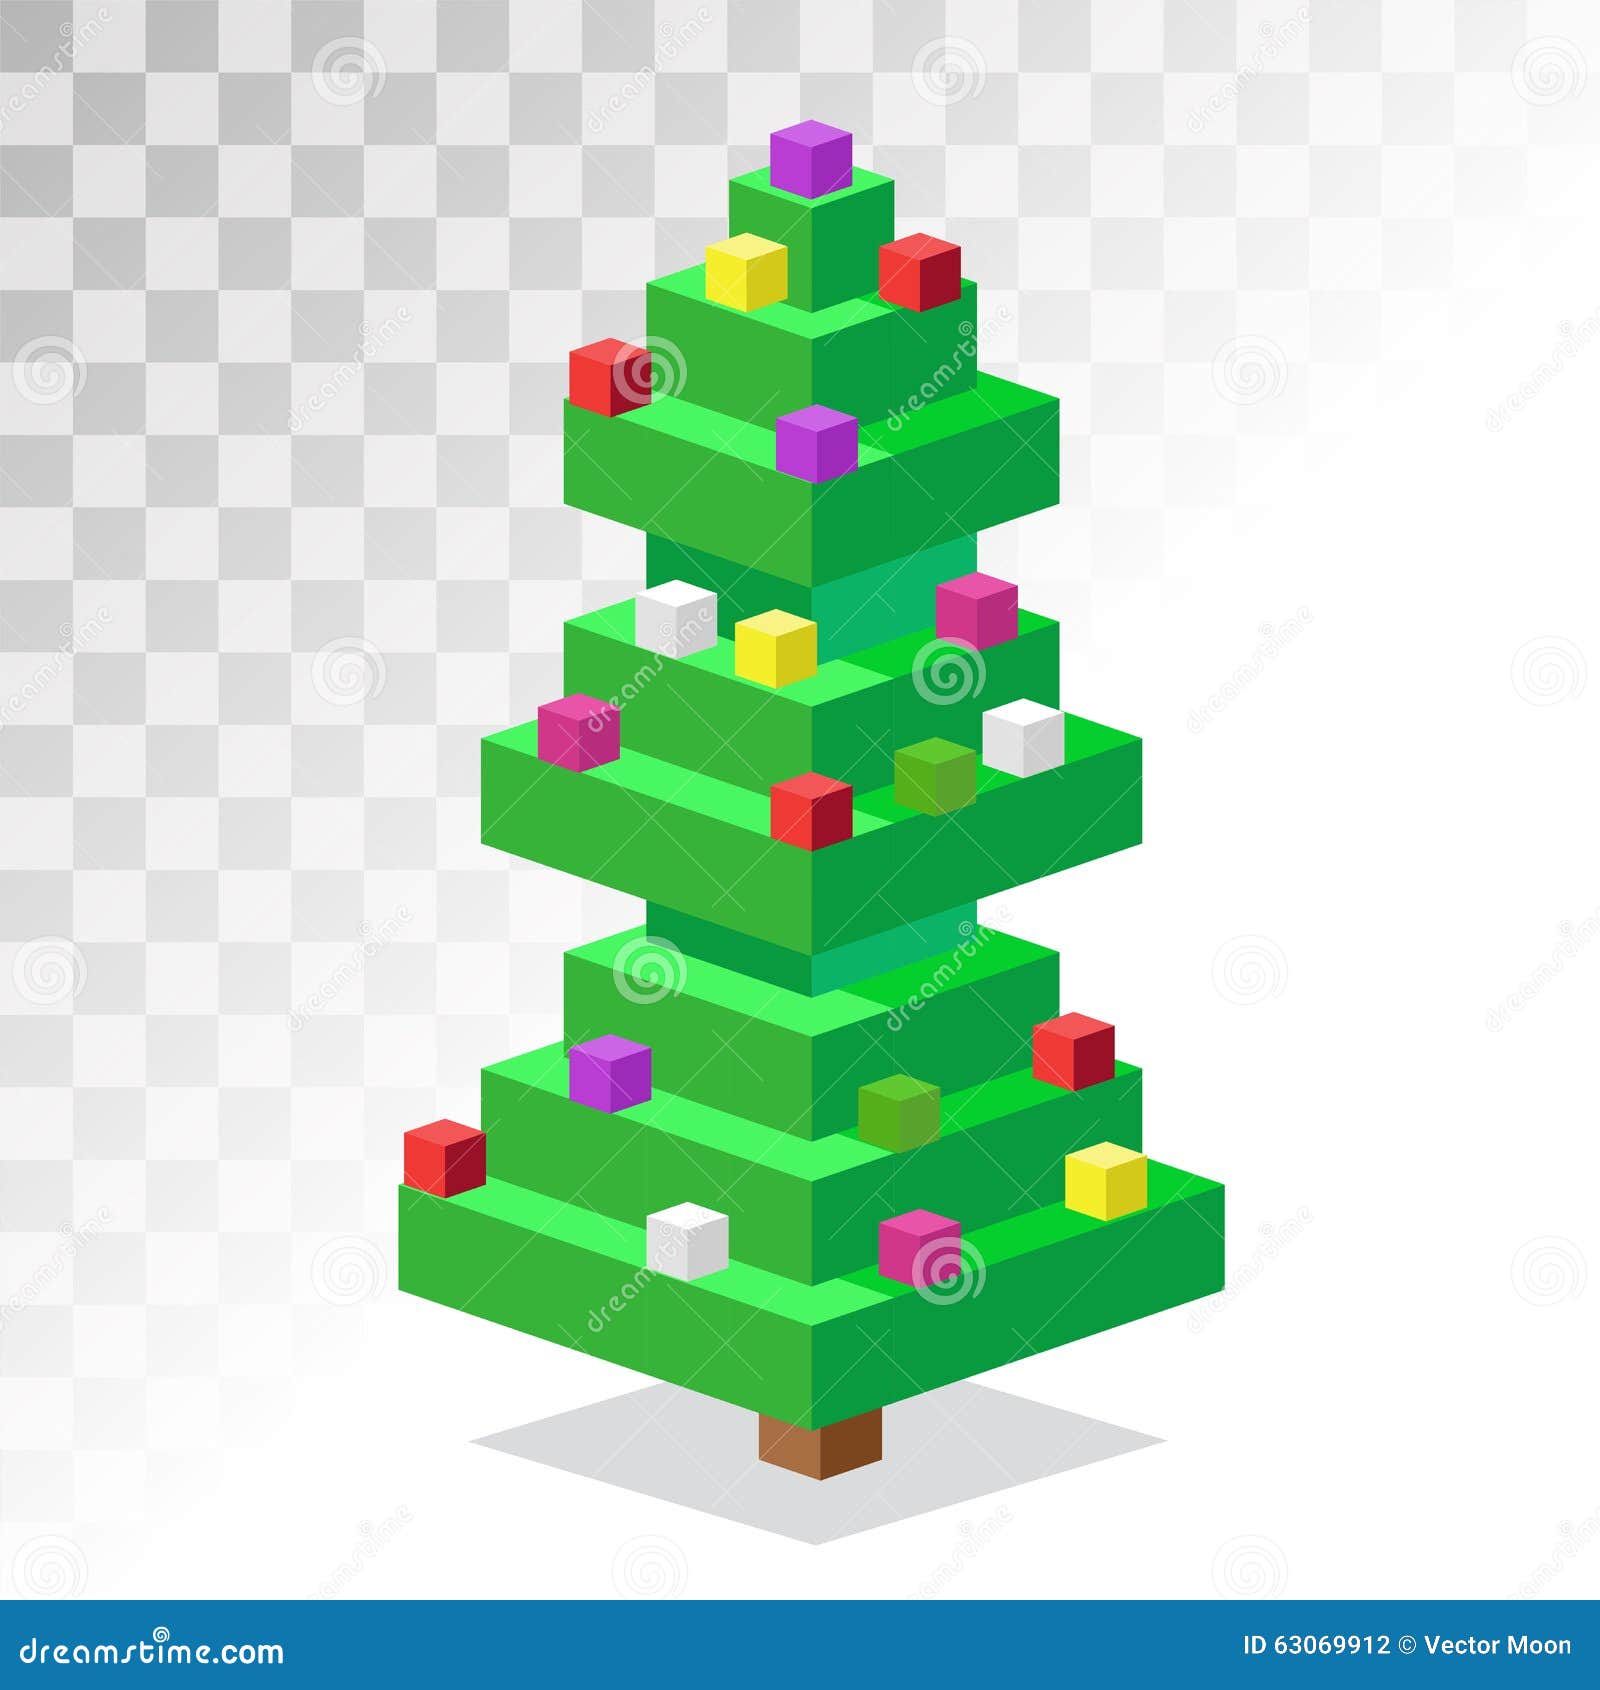 árvore de natal de pixel art, com ícone de vetor de estrelas e